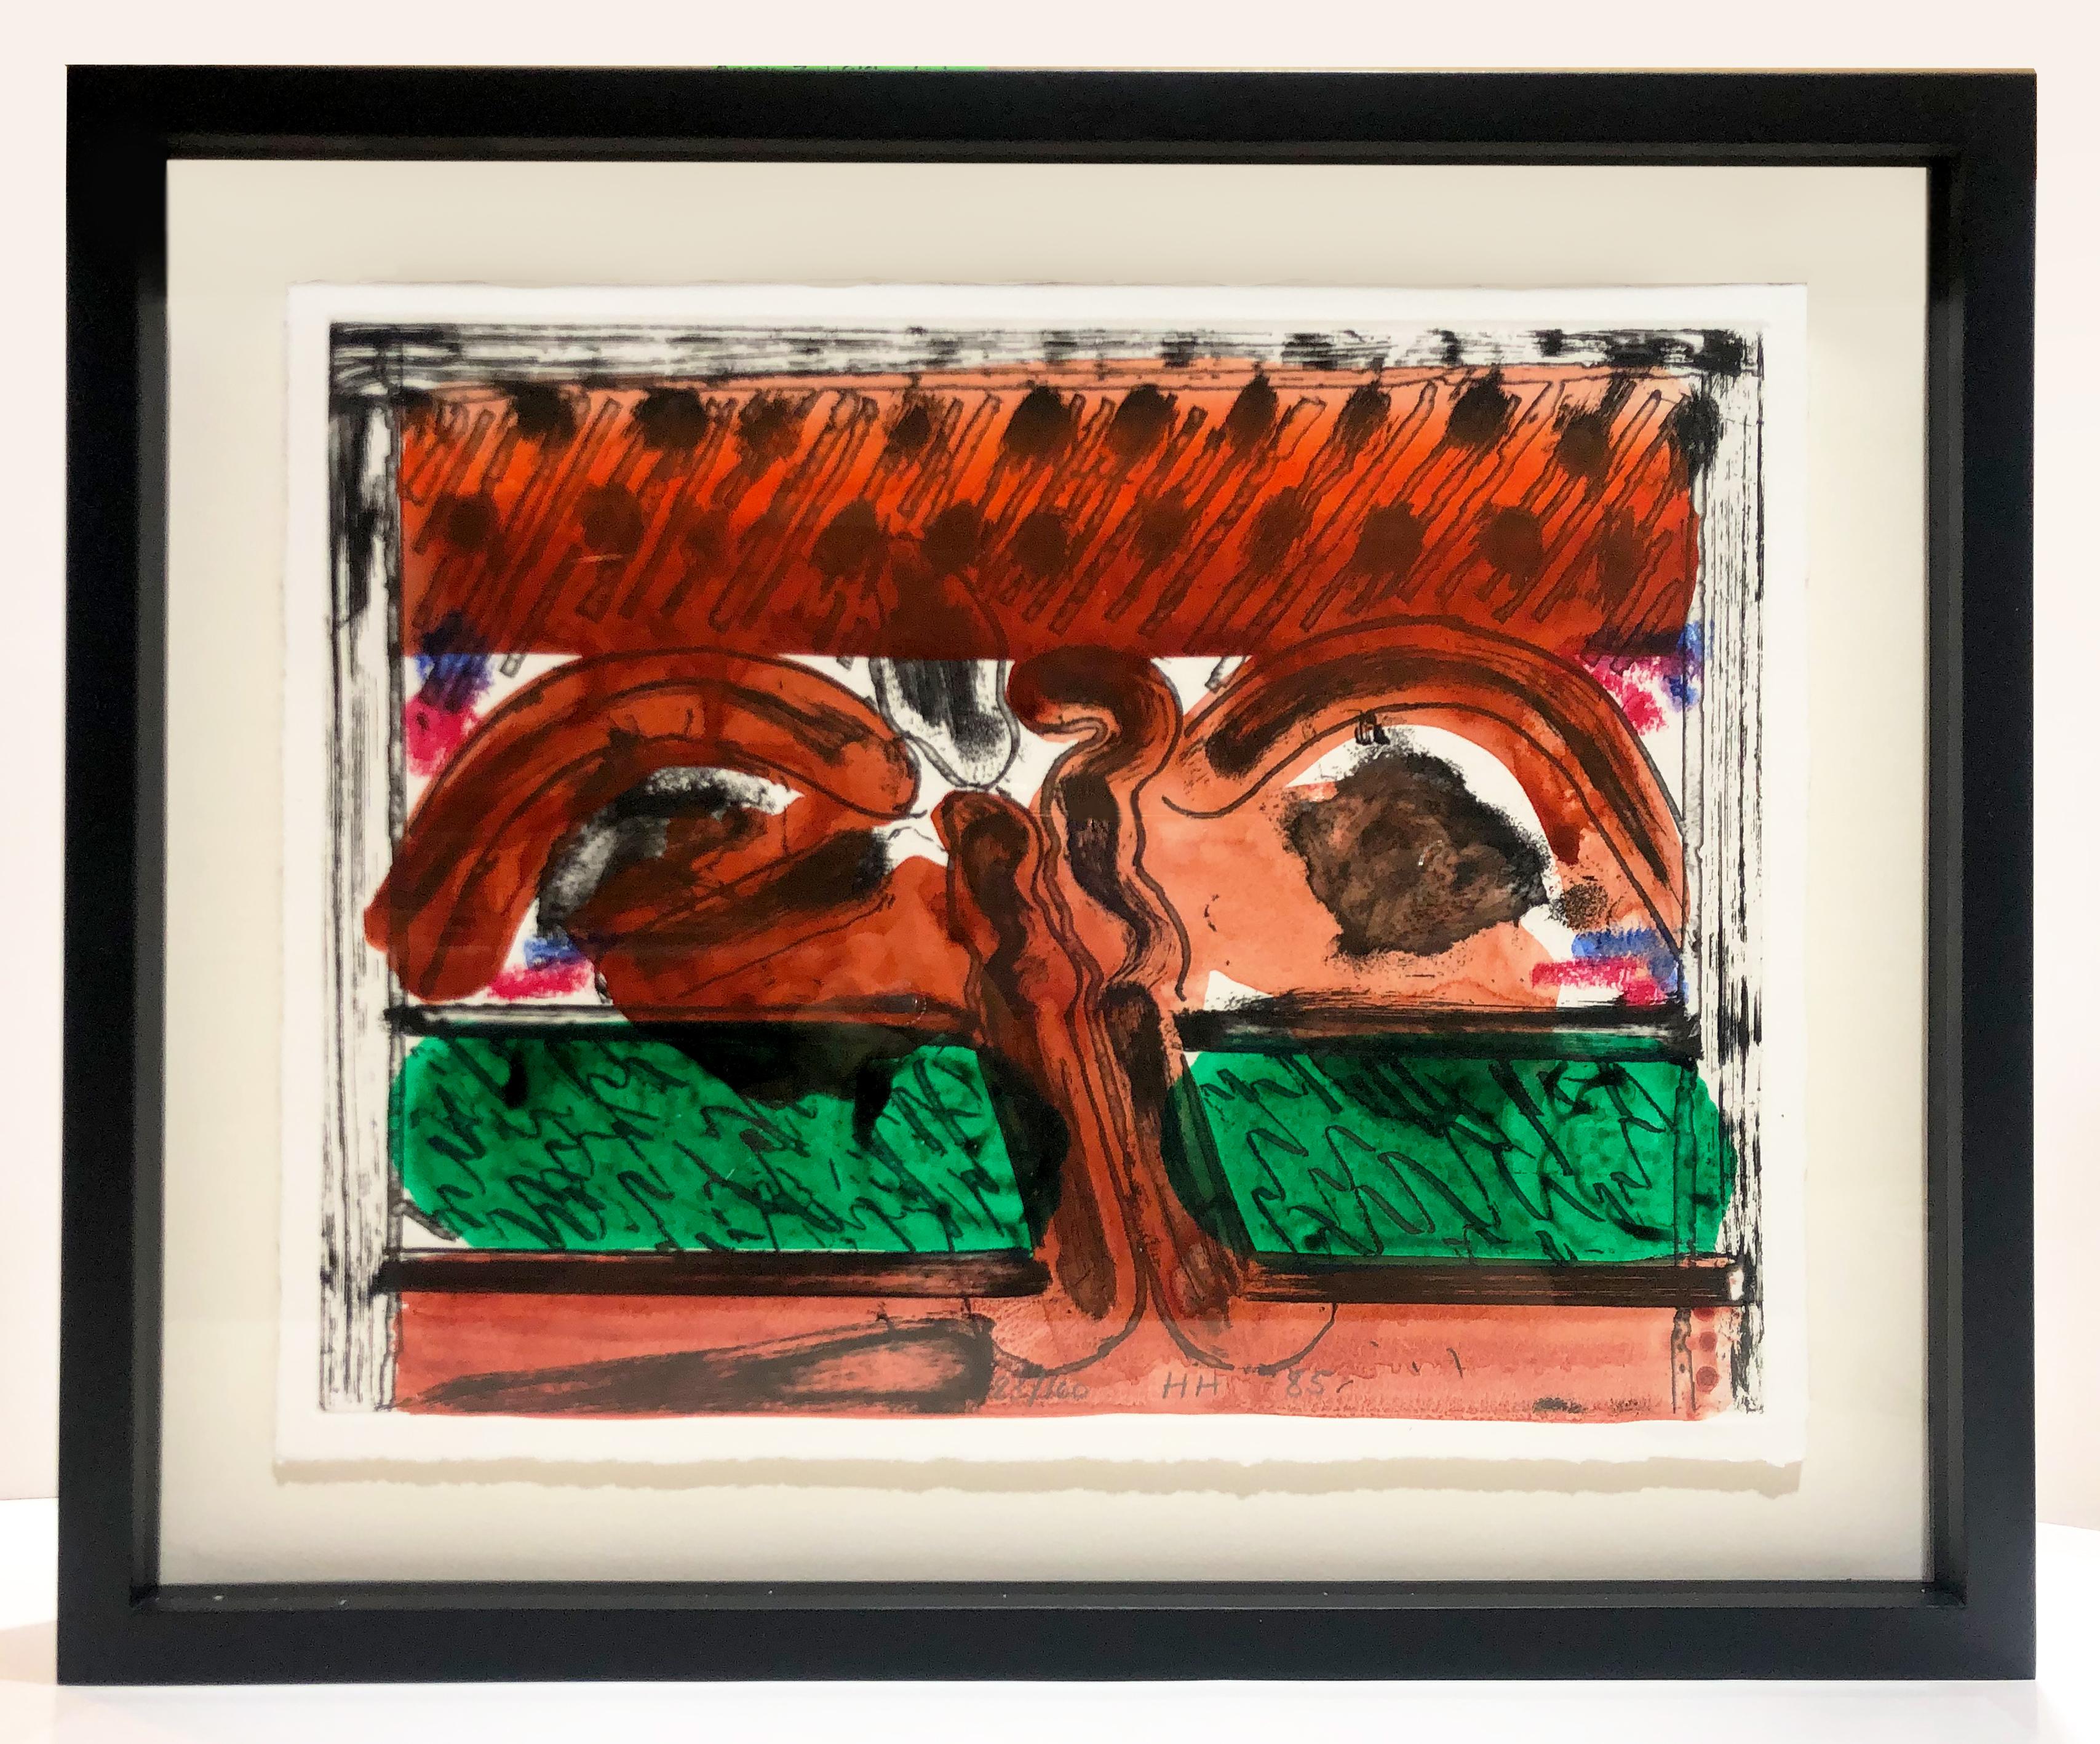 DH in Hollywood (David Hockney) Howard Hodgkin colorful abstract painting framed